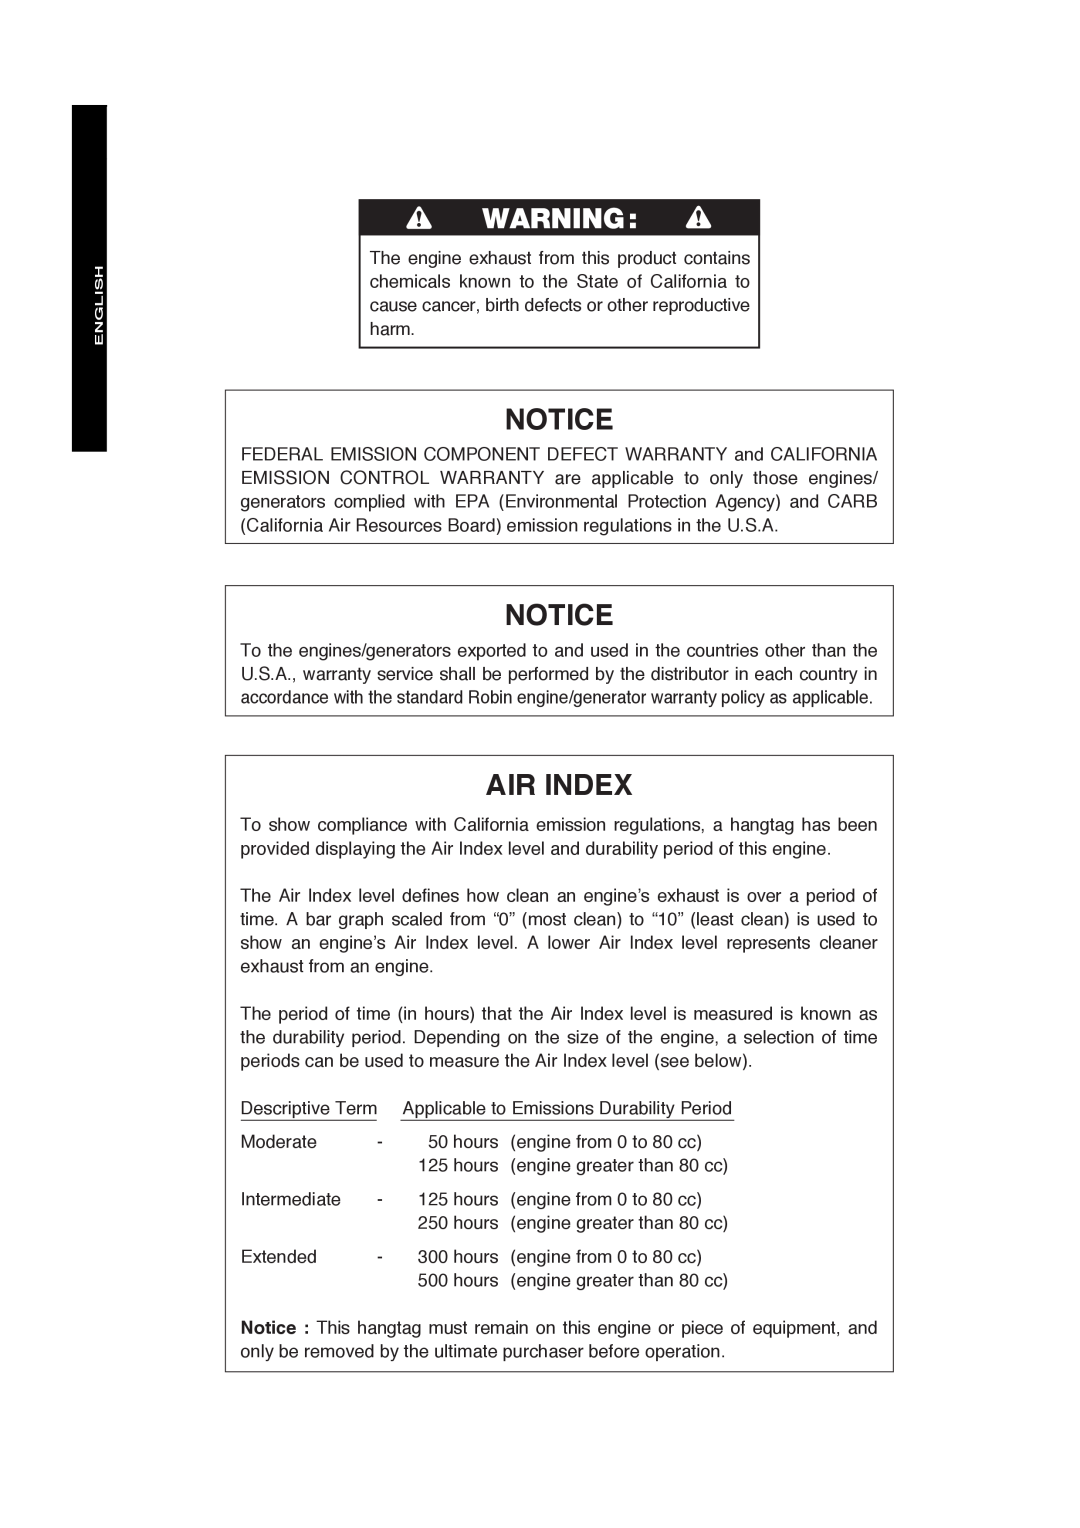 Subaru Robin Power Products PKV401T manual English Française Español, Notice, Air Index 